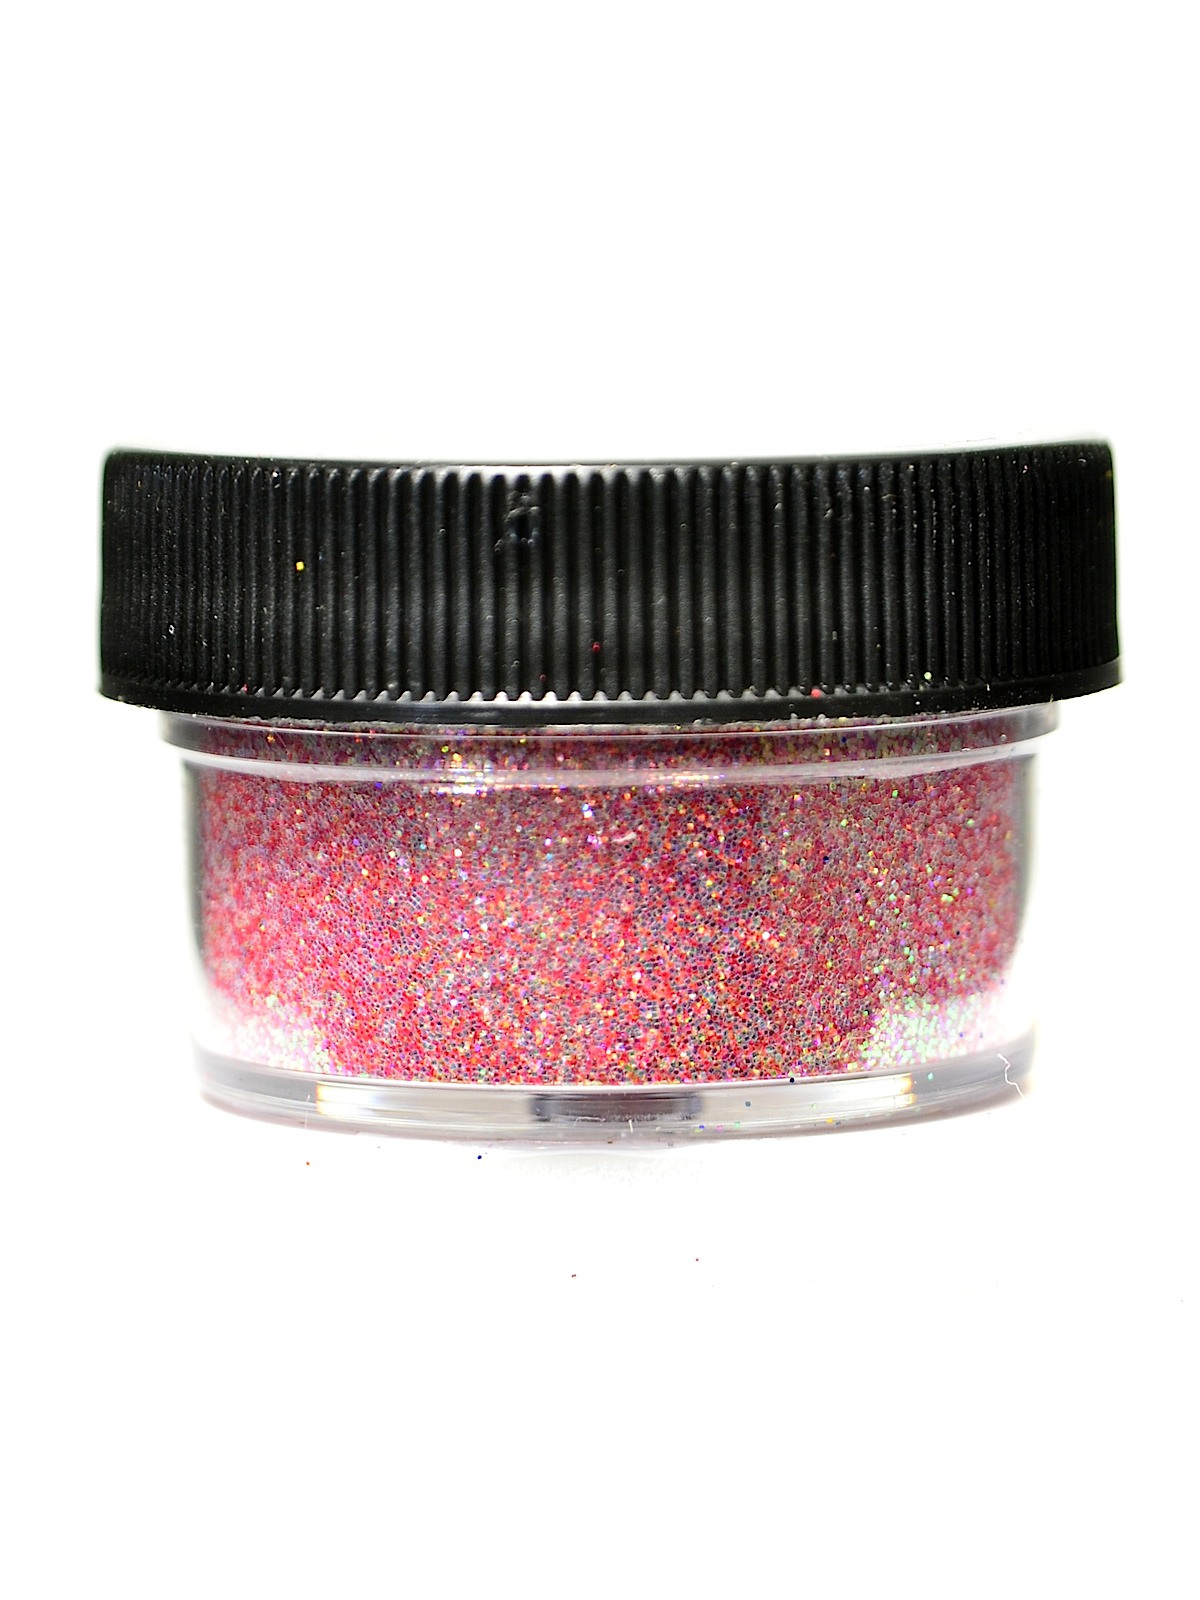 Ultrafine Transparent Glitter Wild Rose 1 2 Oz. Jar